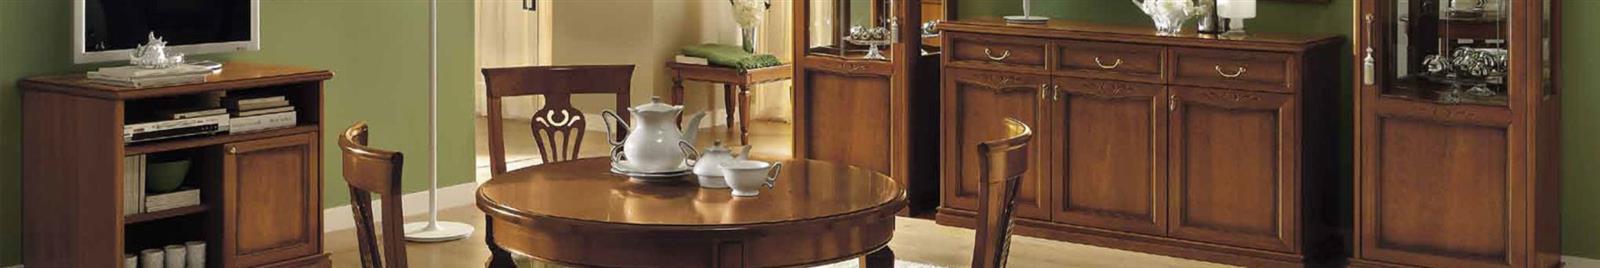 Nostalgia Day - Walnut - Classic Italian Dining Room Furniture